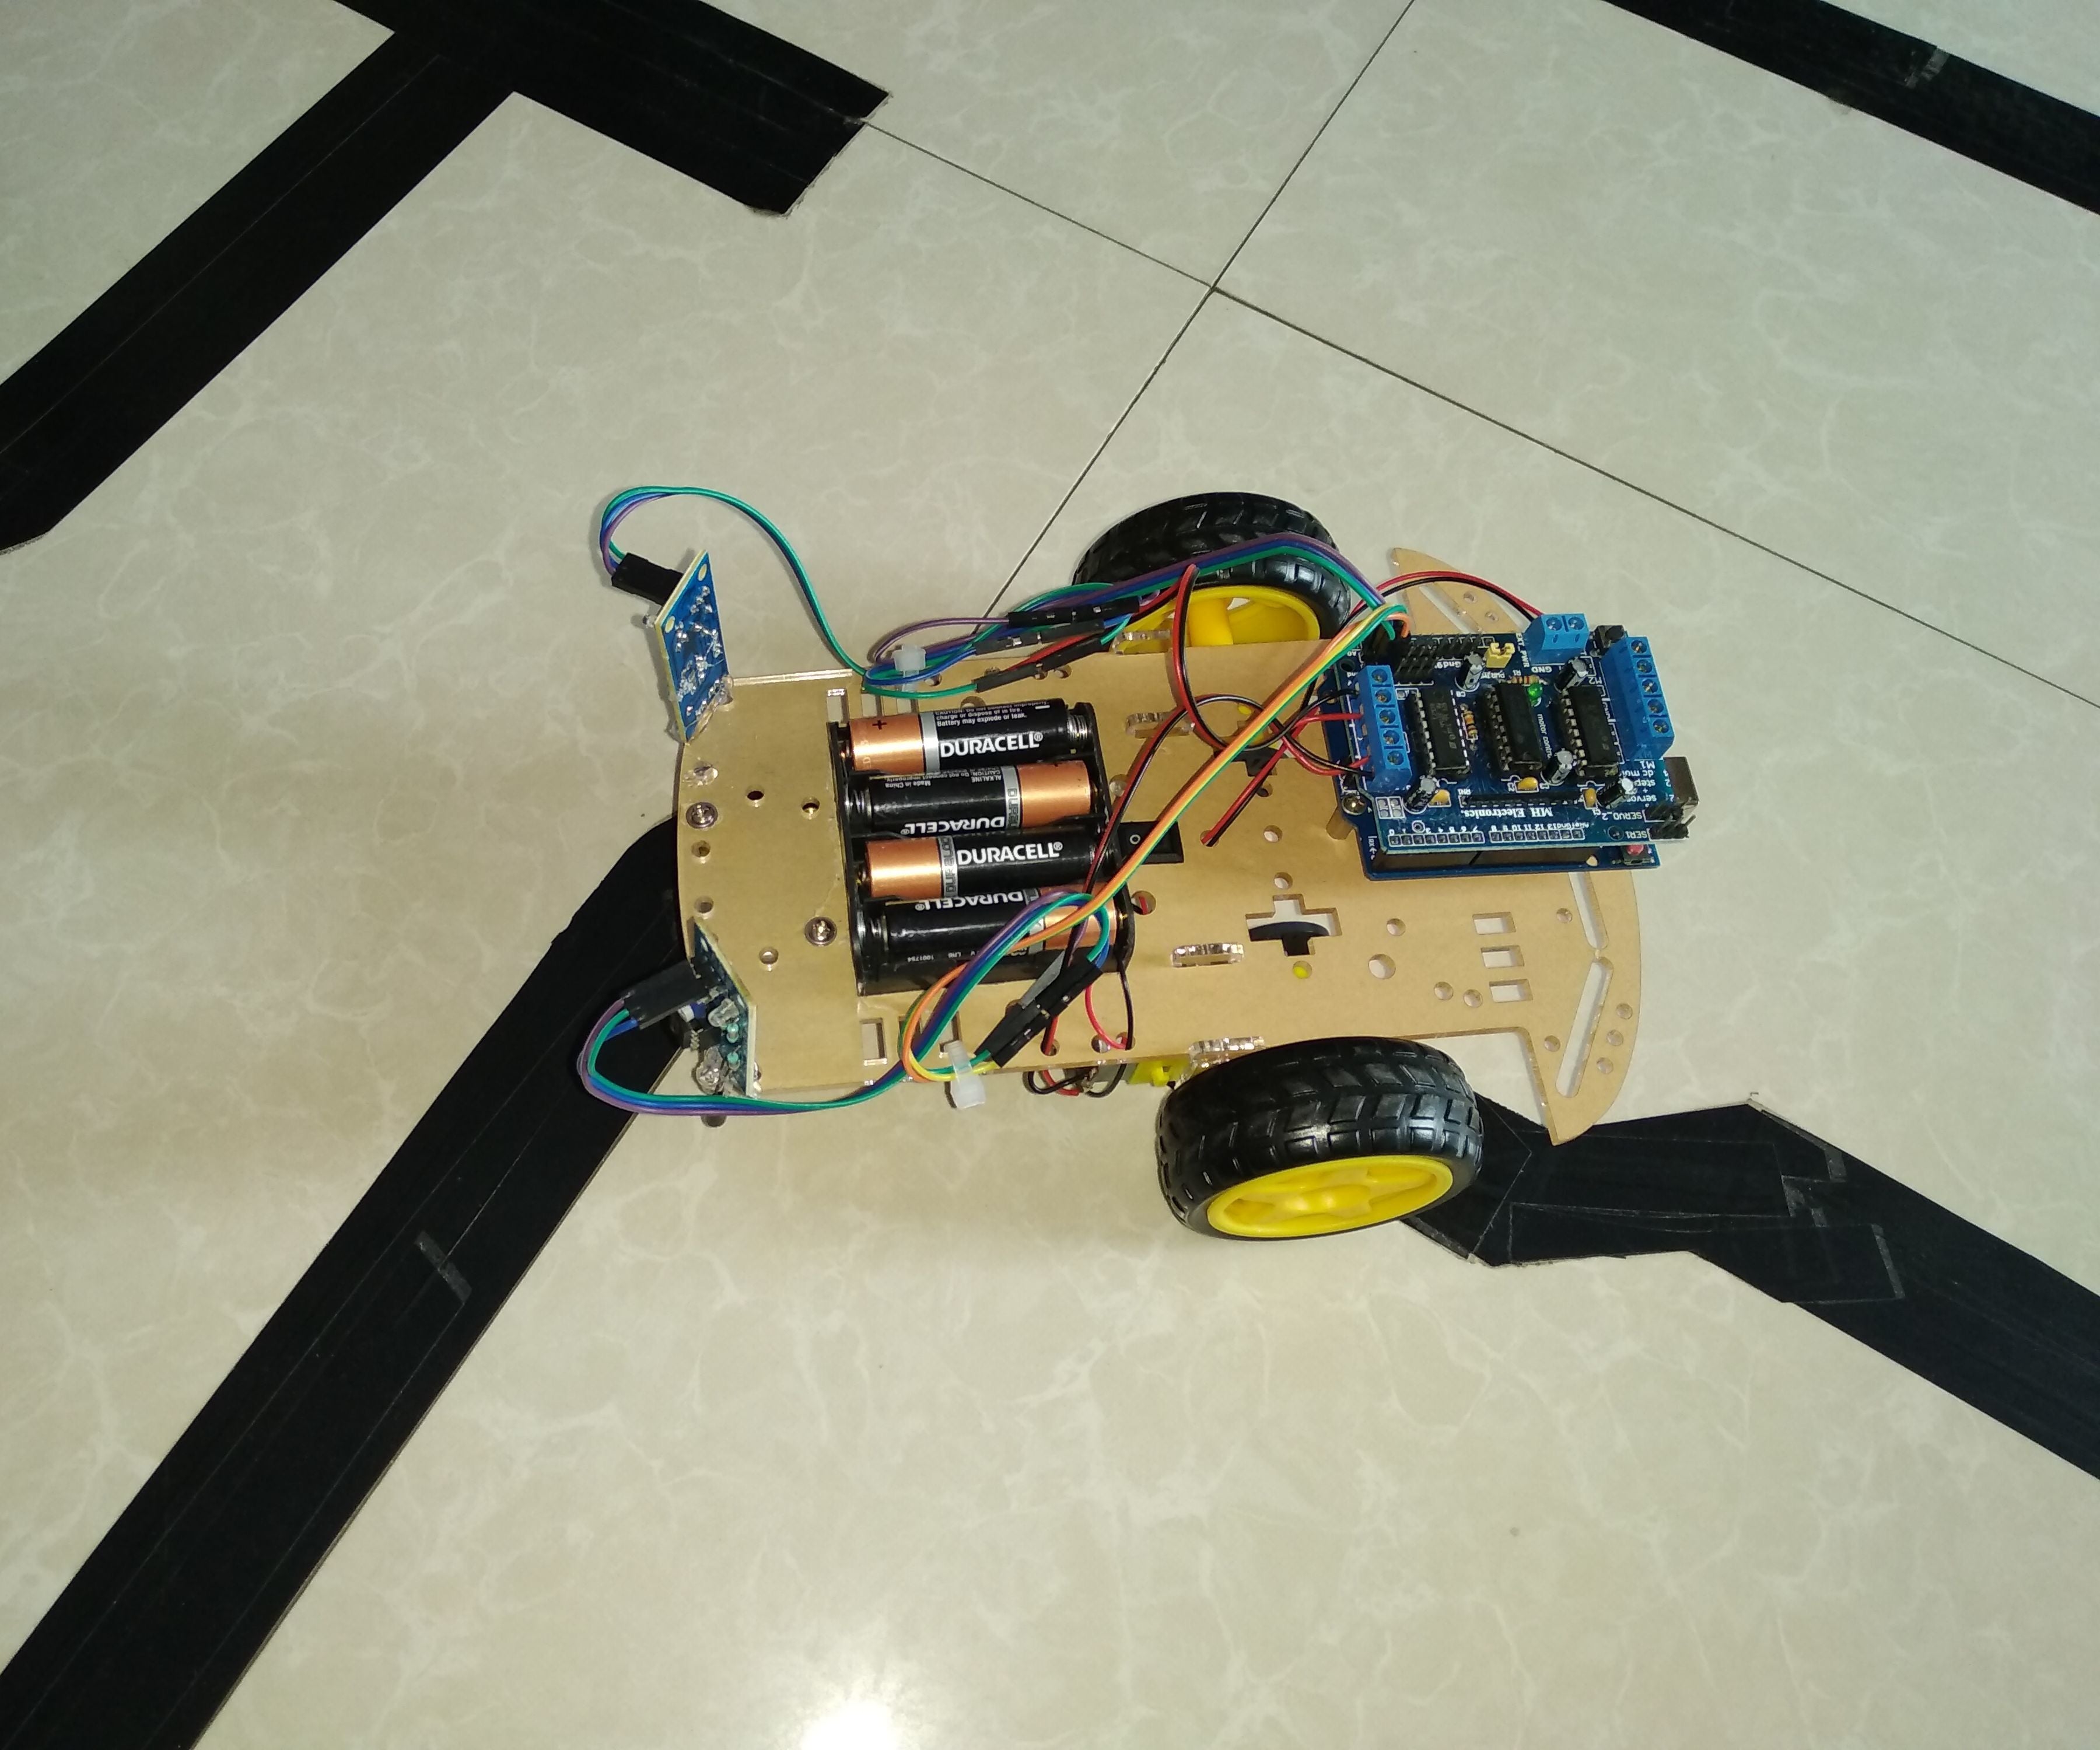 How to Make Line Follower Robot Using Arduino